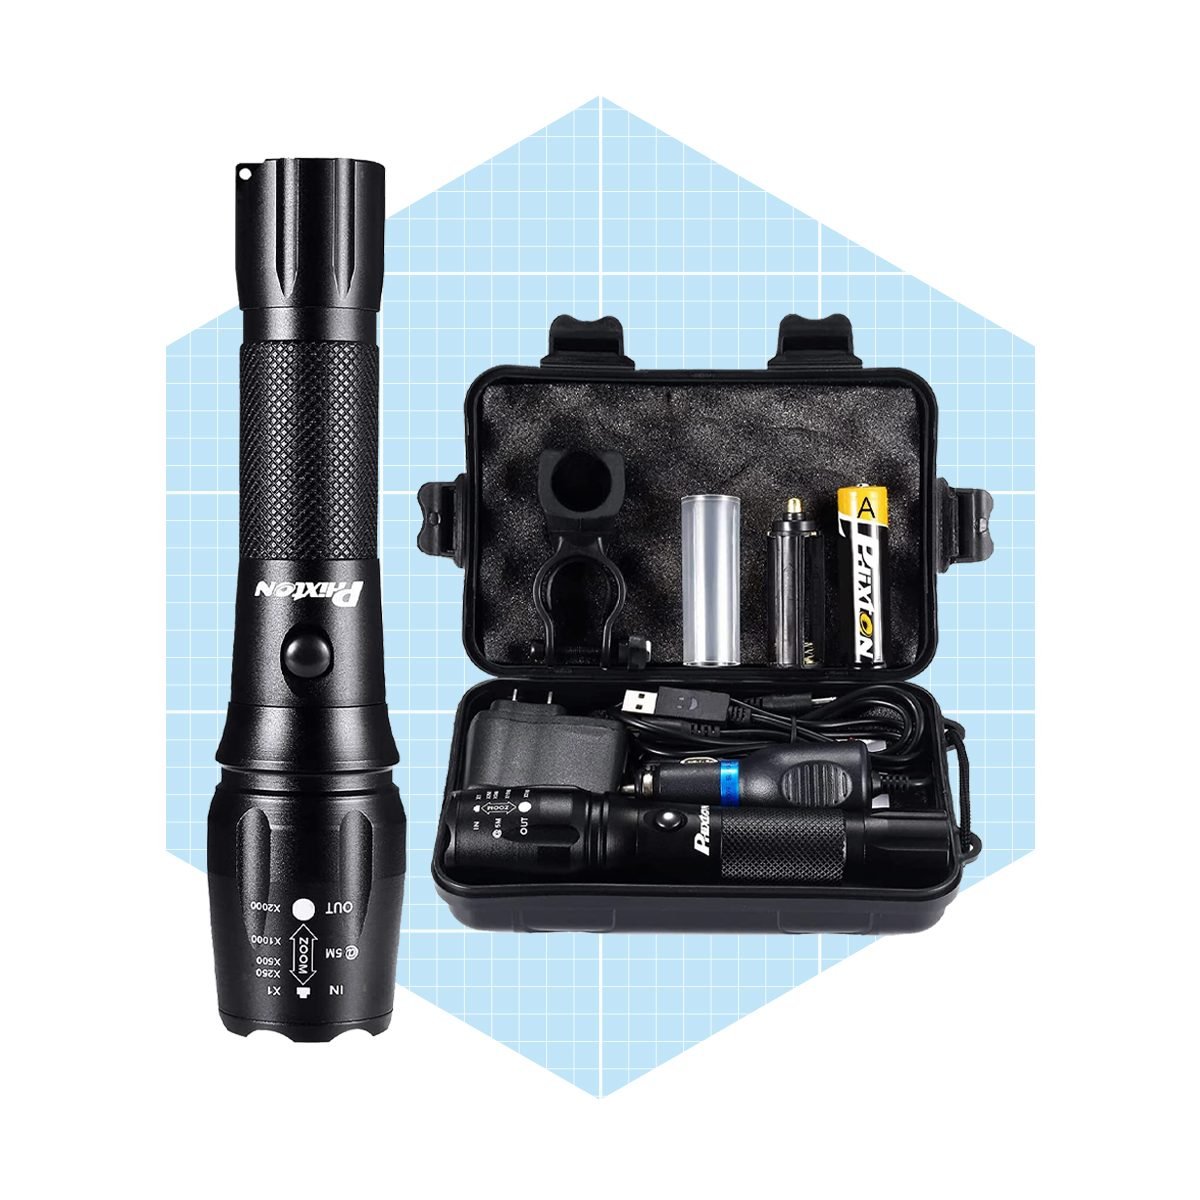 Phixton Rechargeable High Lumens Tactical Handheld Flashlight Ecomm Amazon.com